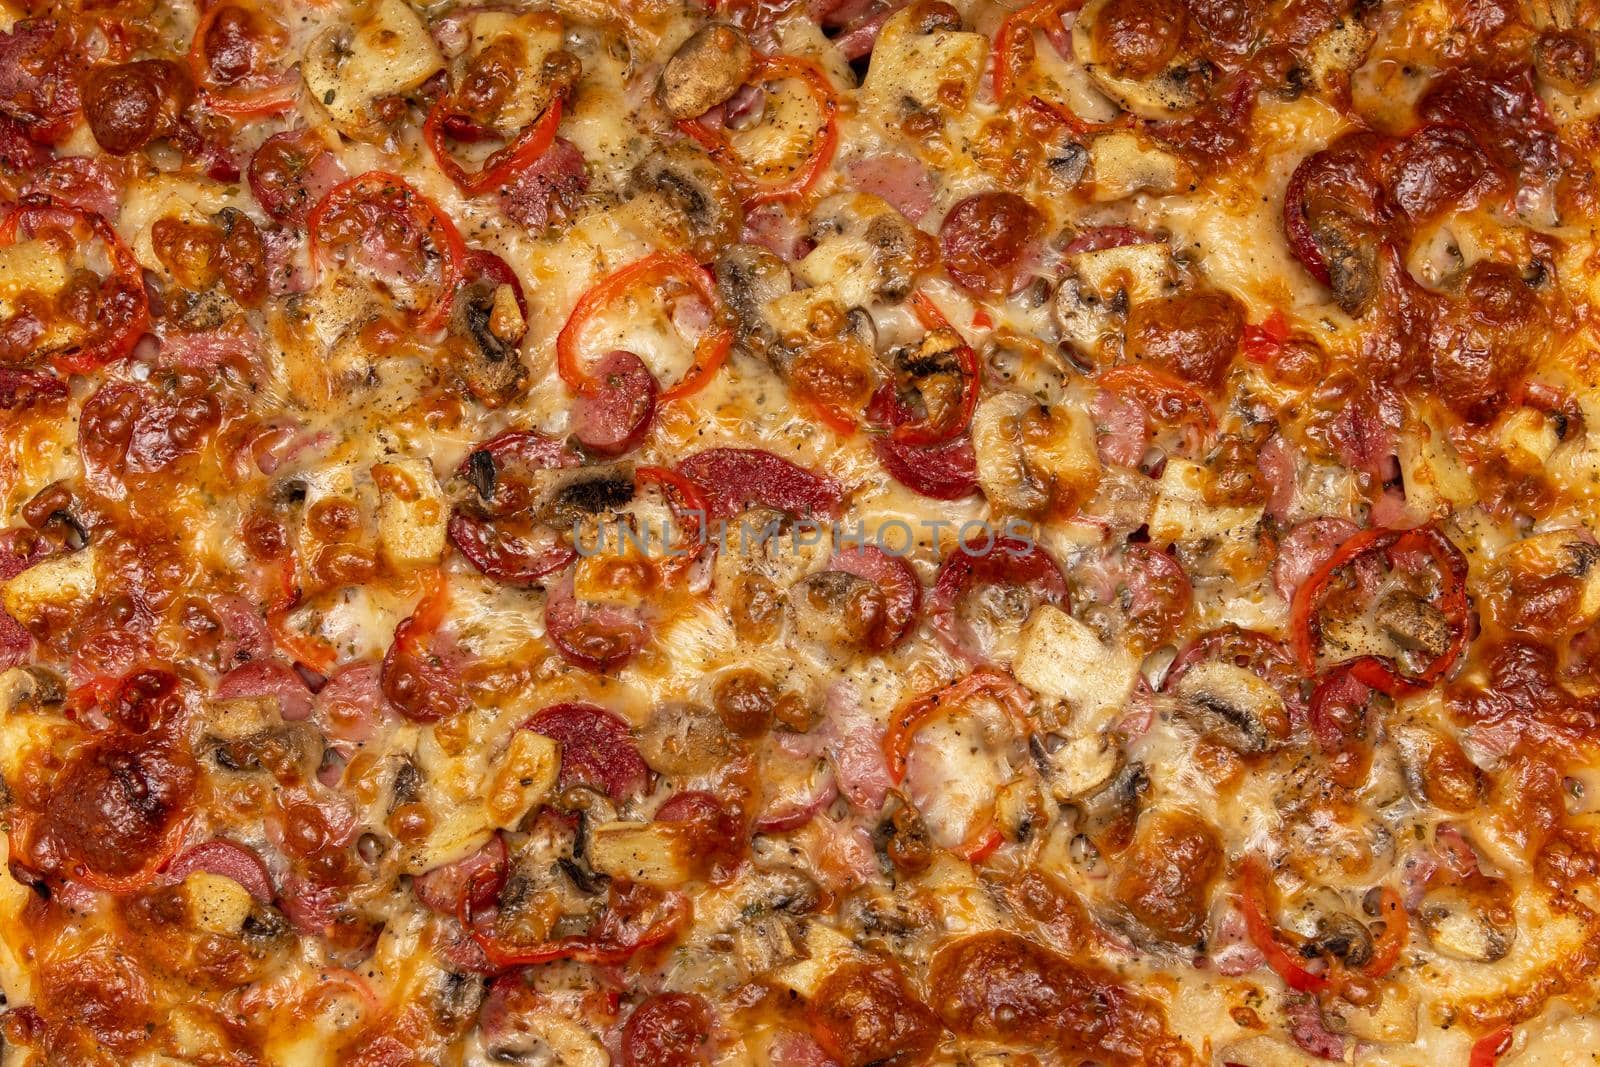 Homemade mushrooms, Turkish sausage, sausage and mozzarella cheese pizza by Sonat